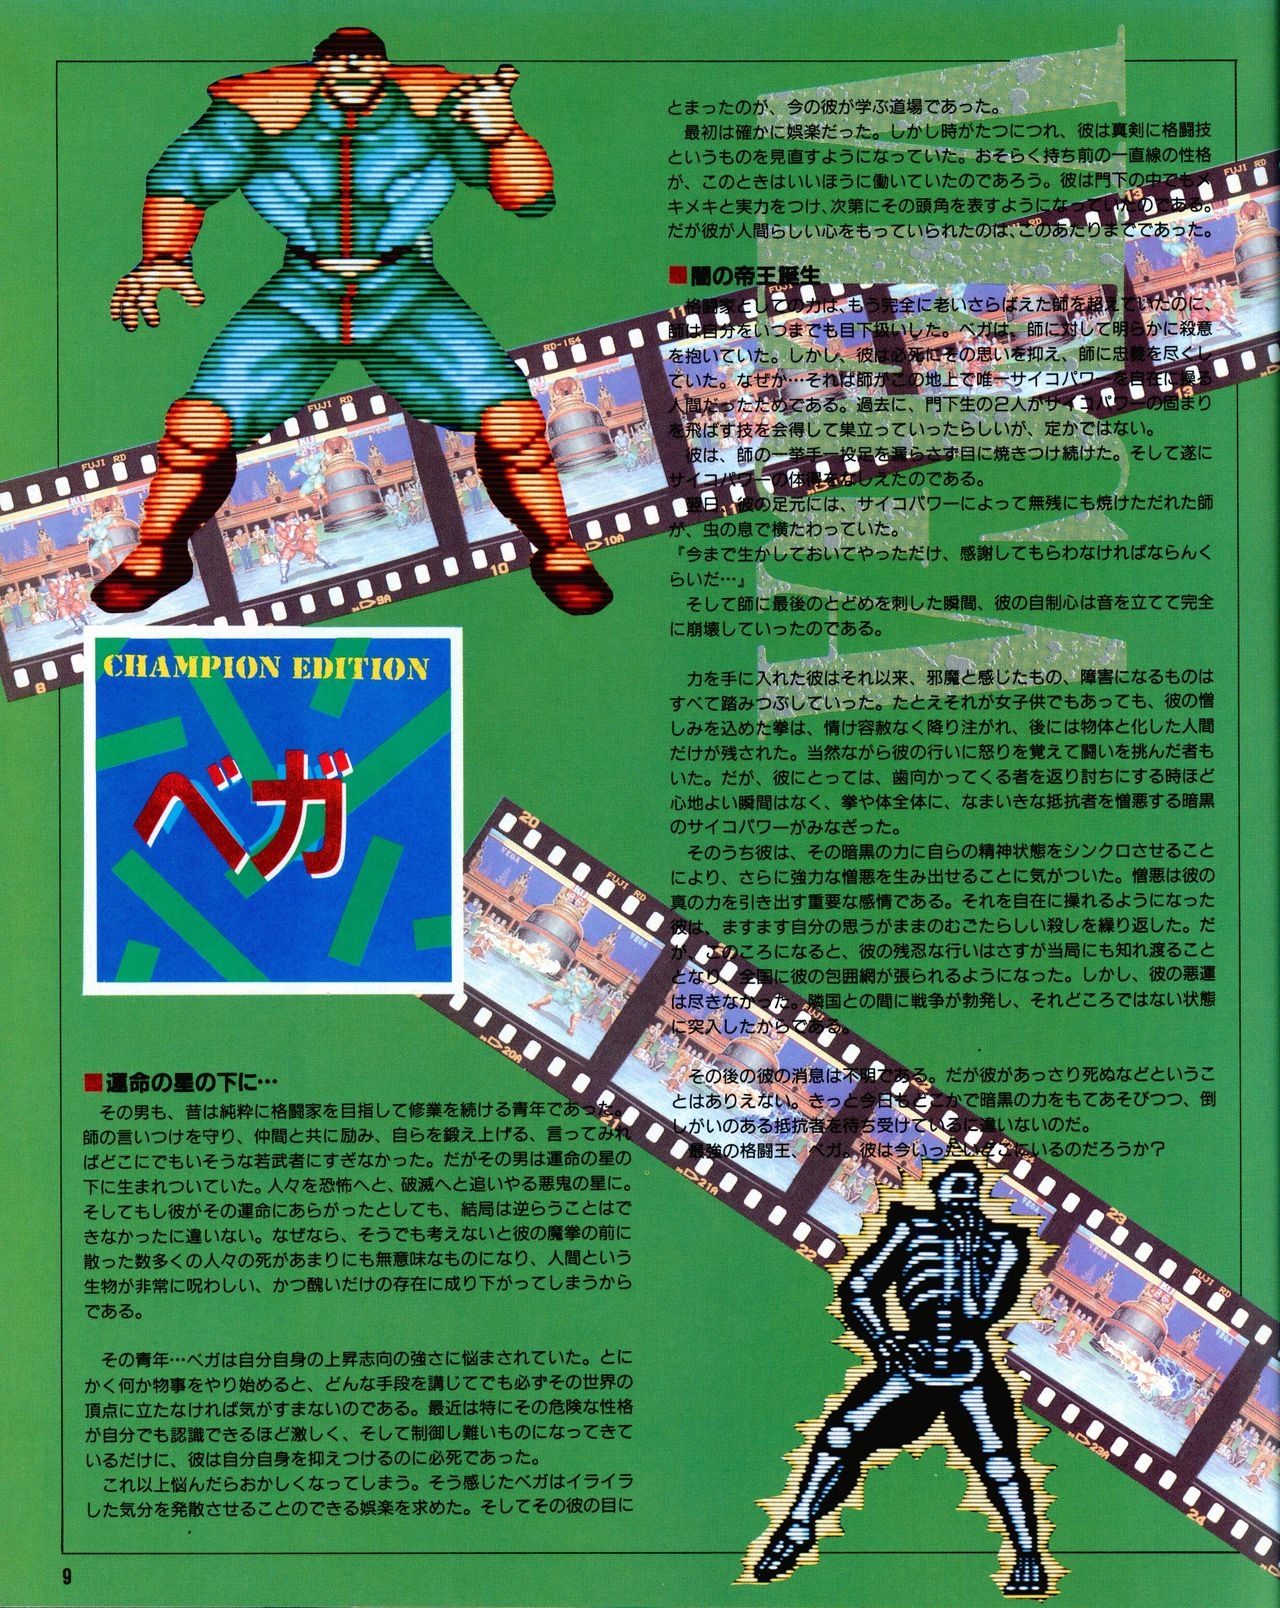 Street Fighter II Dash - Gamest special issue 77 10